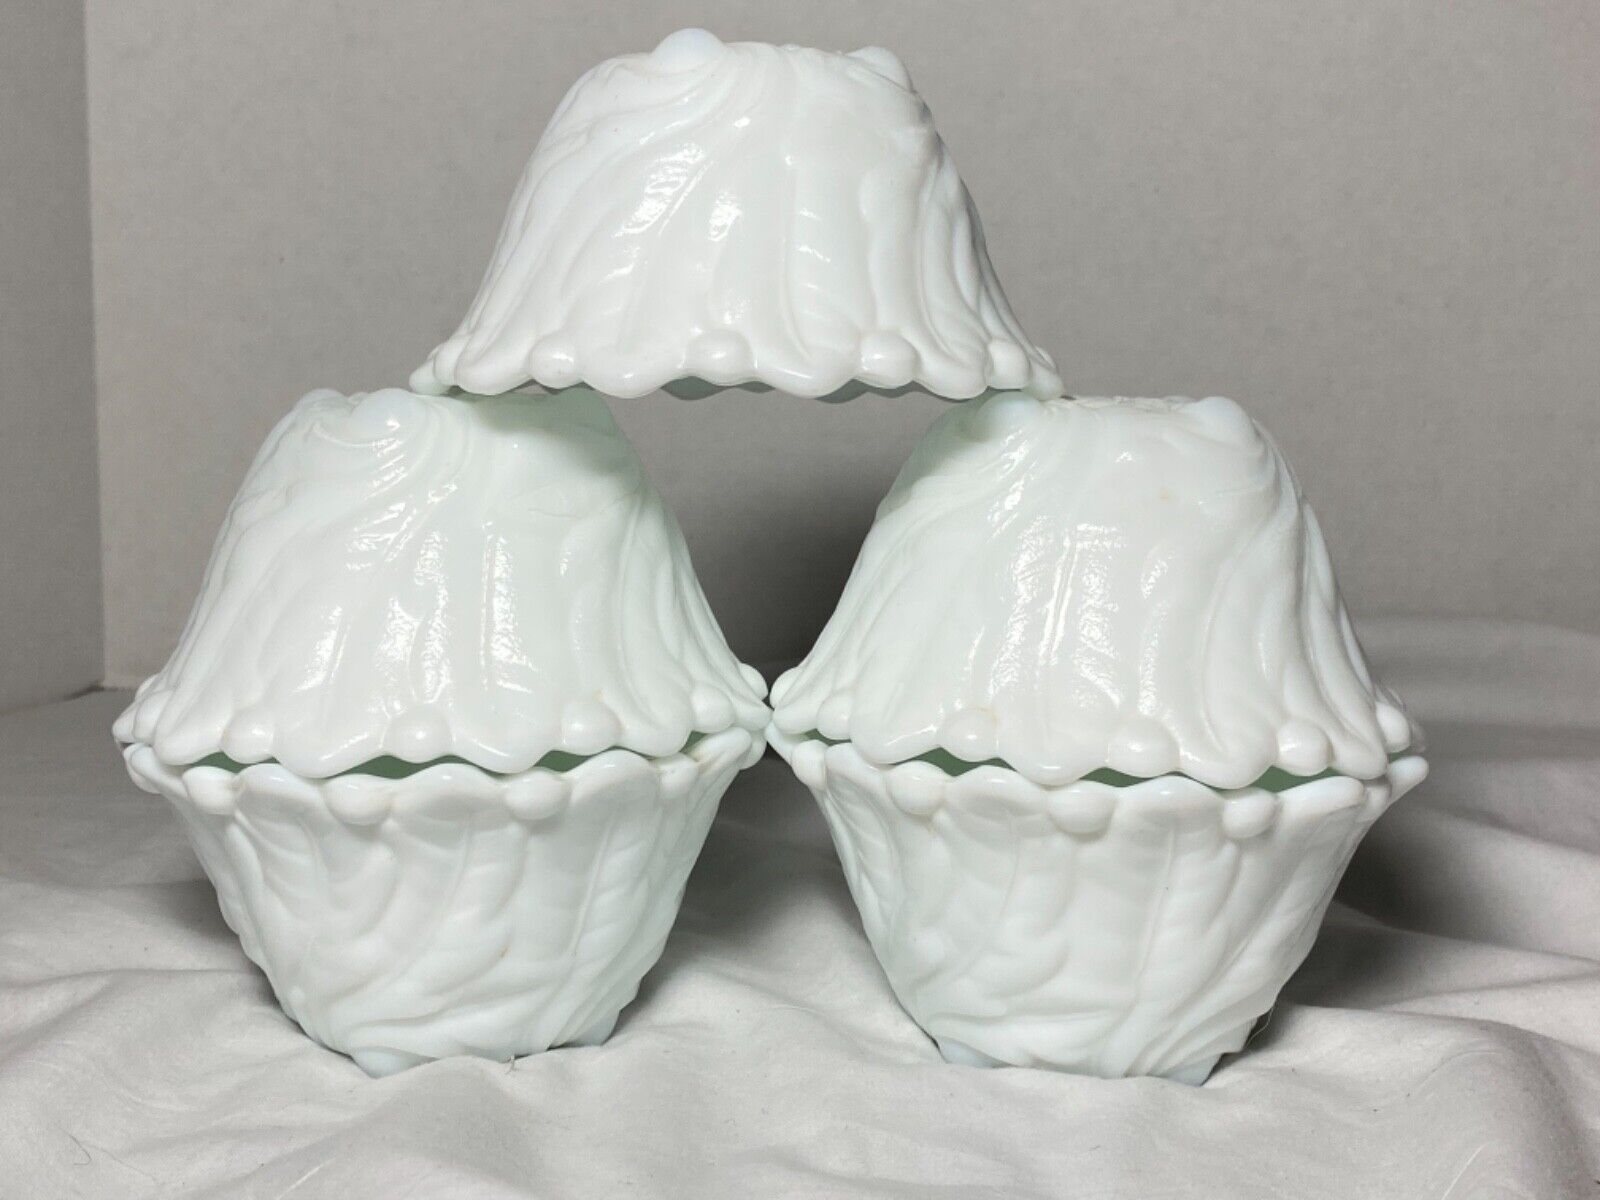 5 Vintage Milk Glass Bowls with Embossed Leaf Pattern Milk glass